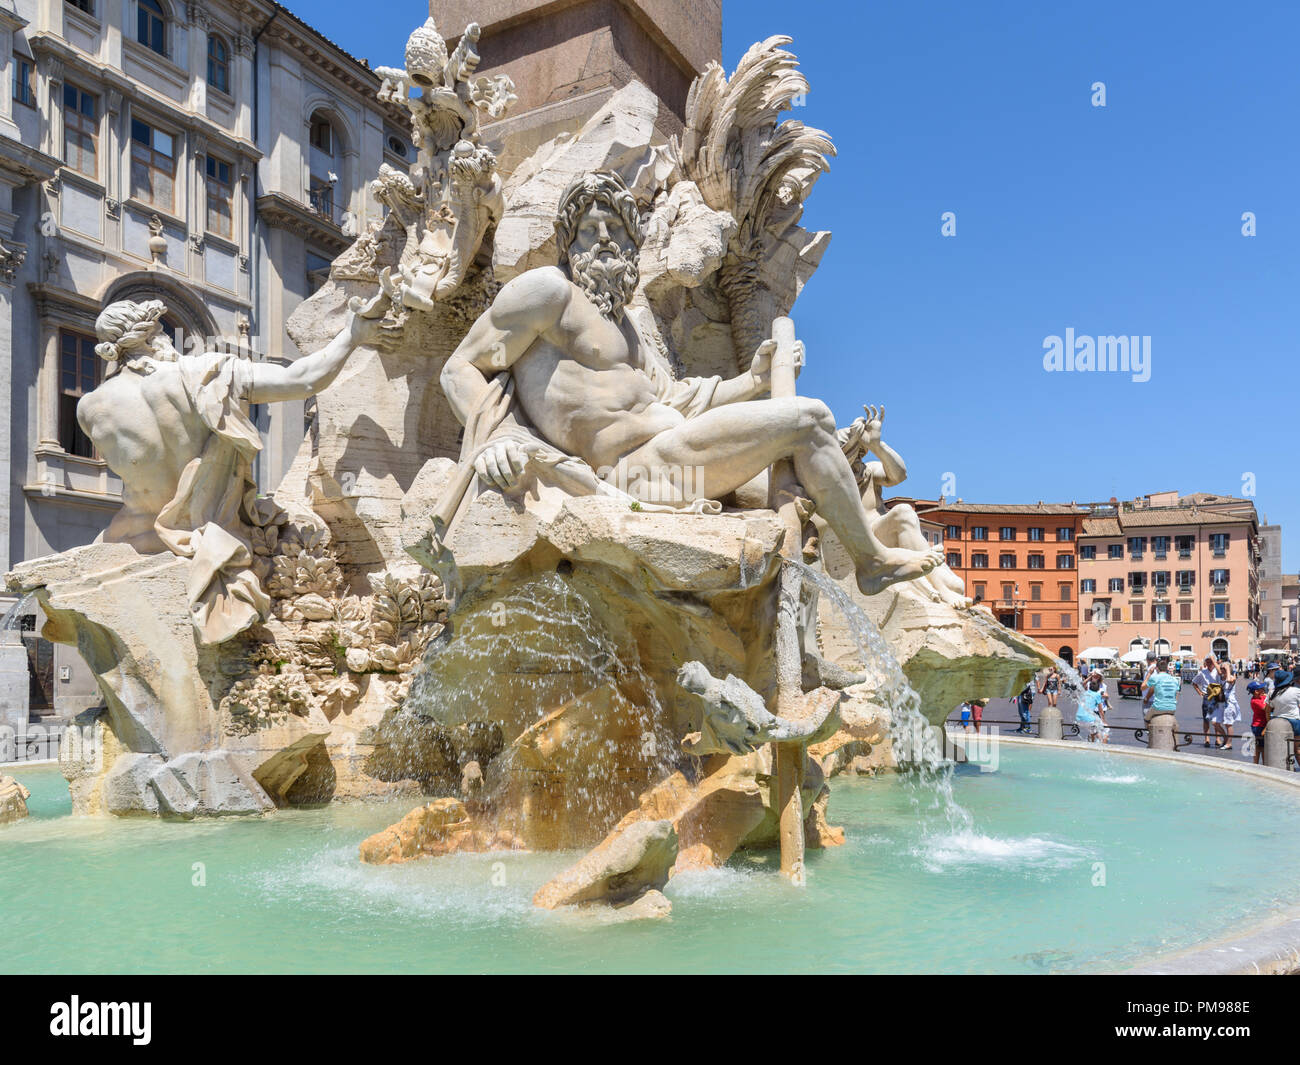 Gange Dieu,Fontana dei Quattro Fiumi, Piazza Navona, Rome, Italie Banque D'Images